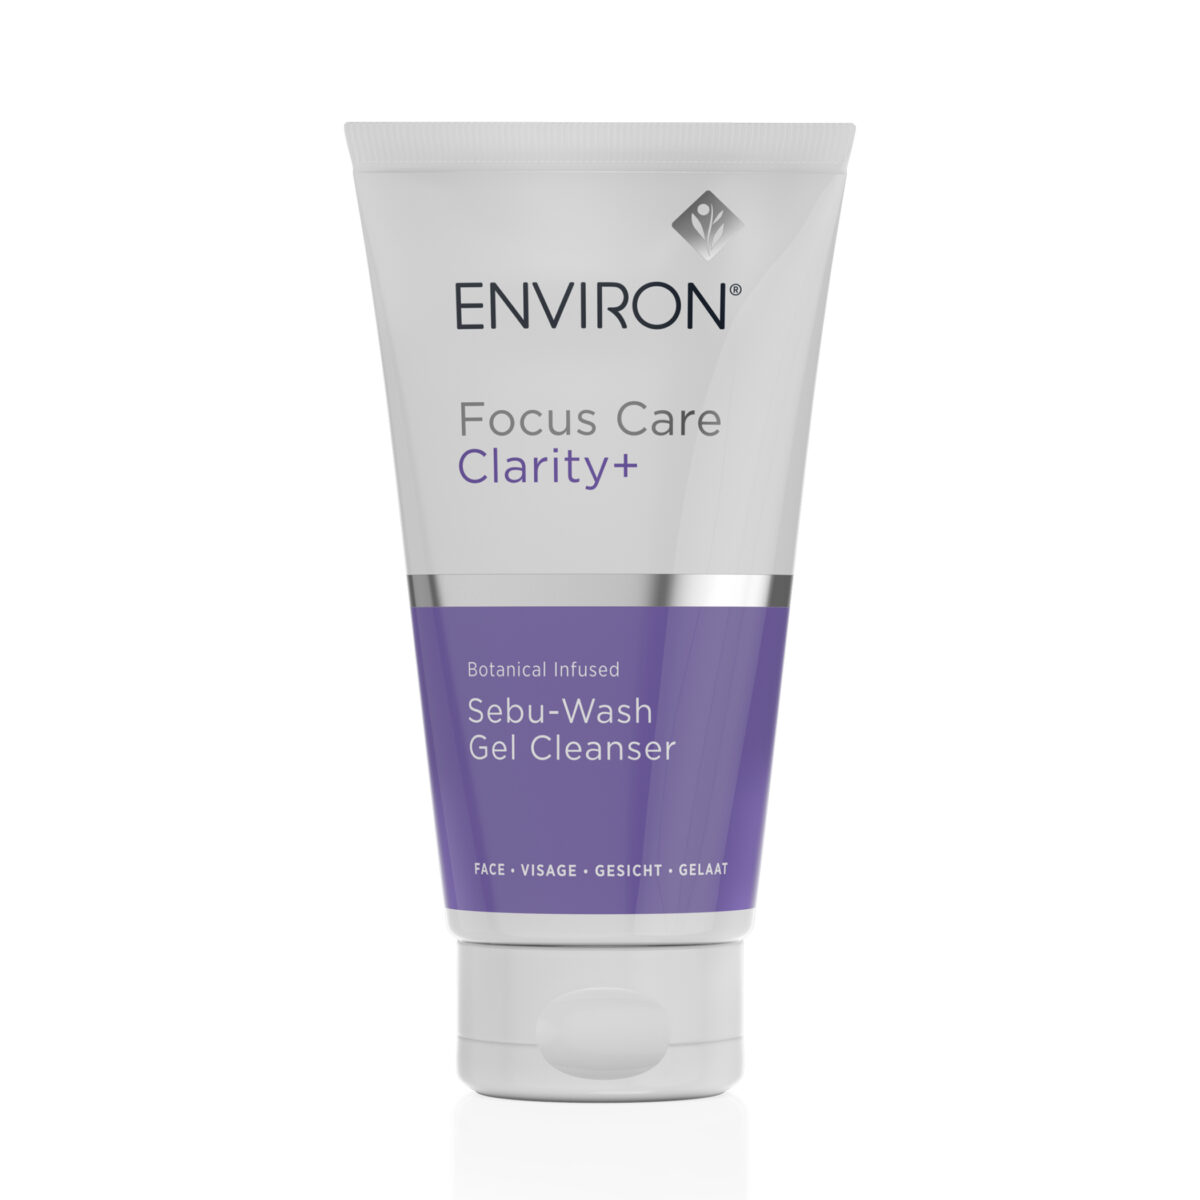 Environ Skin Care Products Sebu-Wash